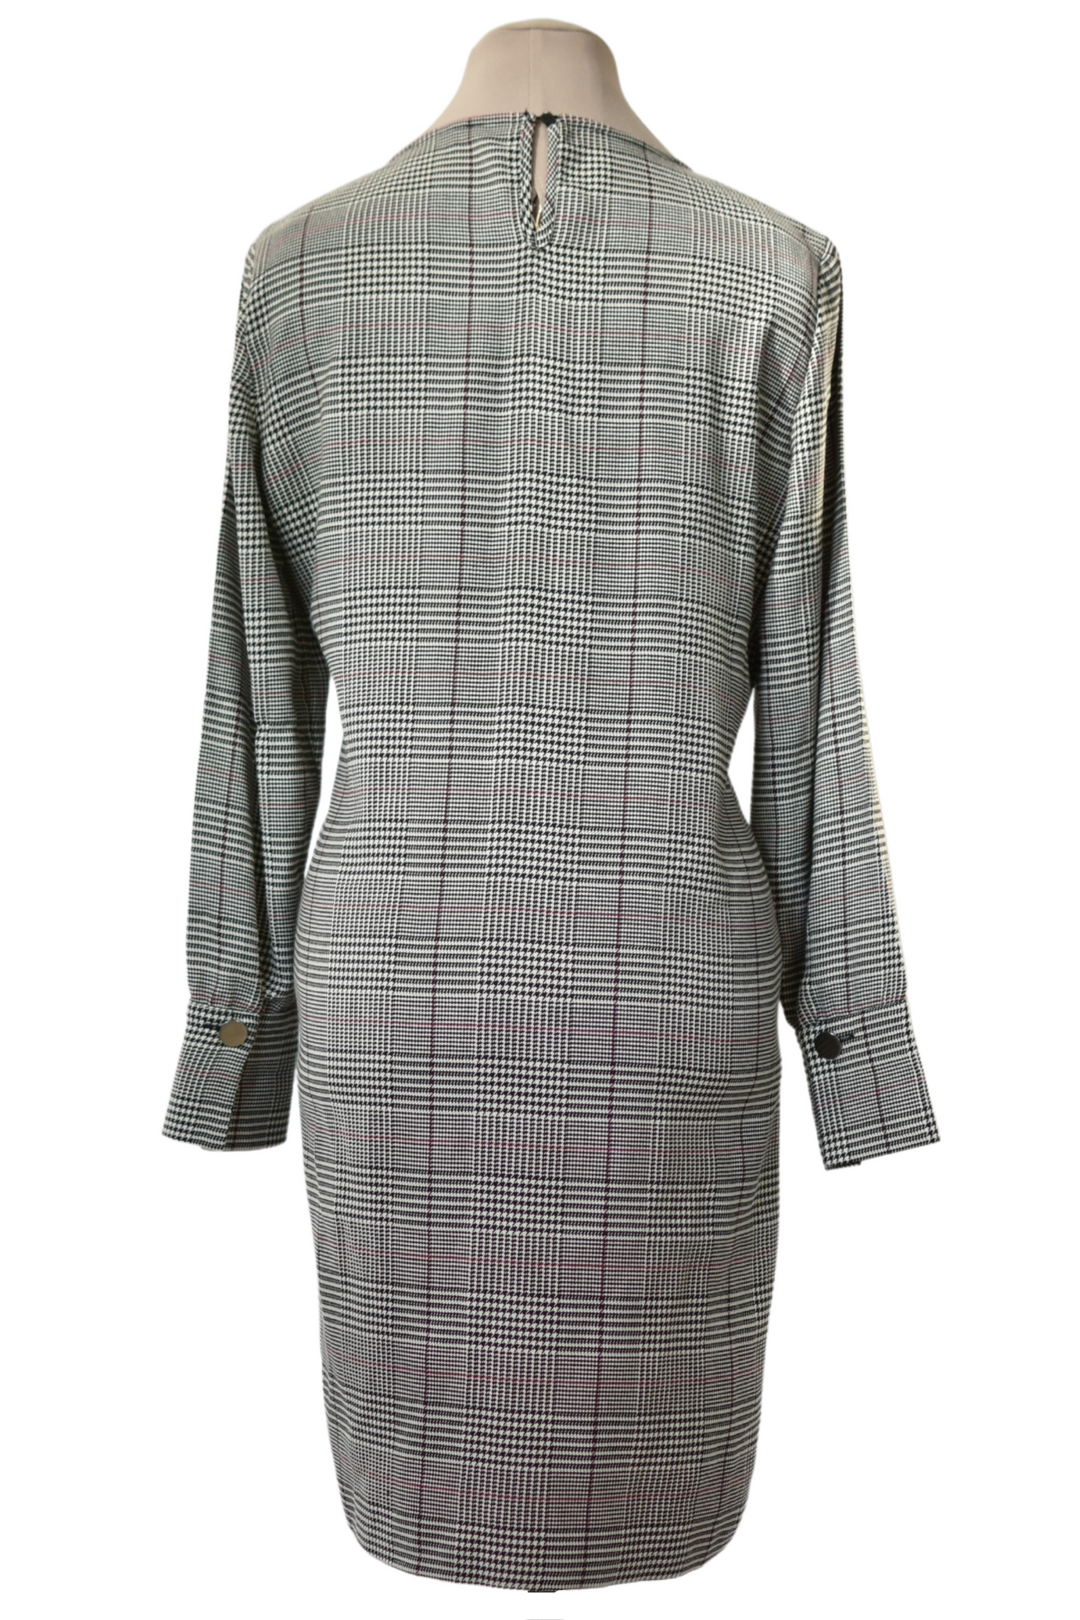 Plaid Checkered Dress